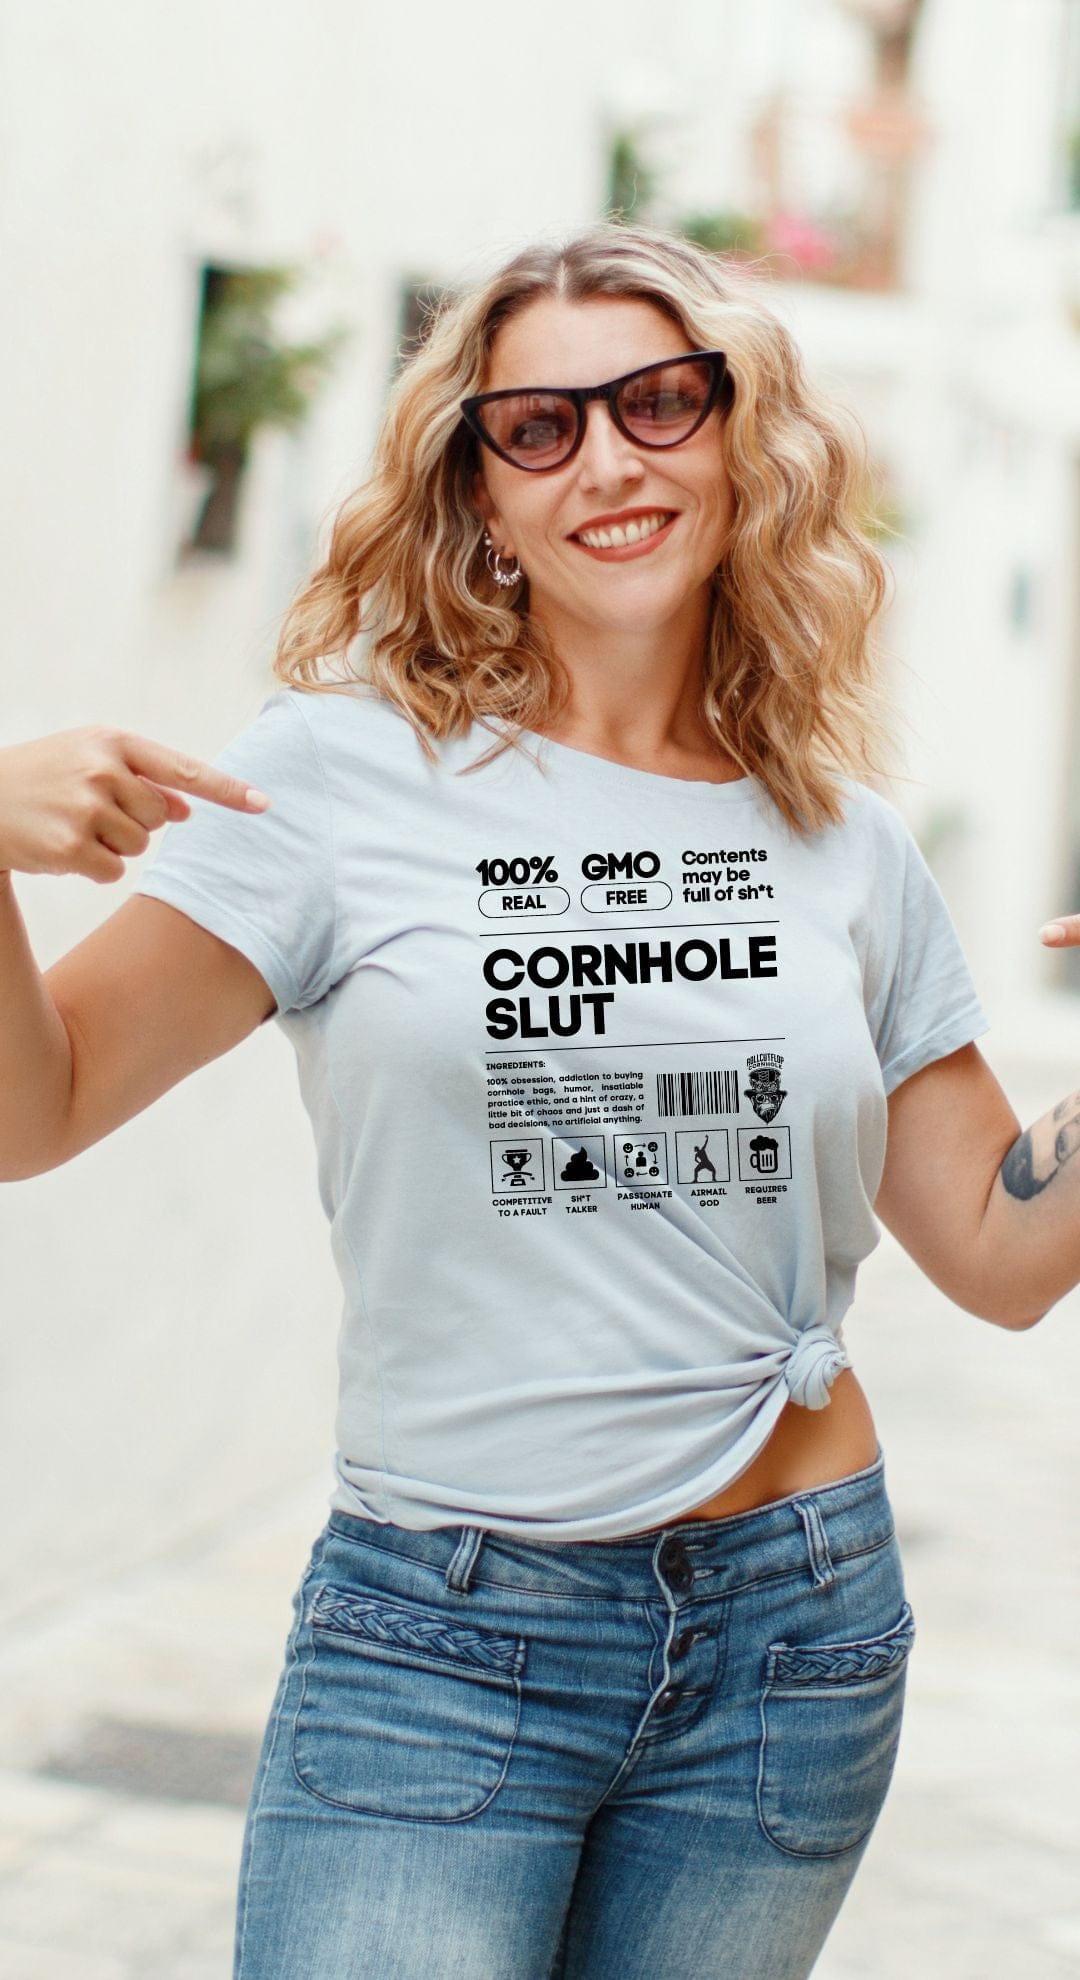 WCornhole Slut Unisex Jersey White Tee - Cornhole Obsession Label & Roll Cut Flop Cornhole Barcodeoman in sunglasses wearing a 